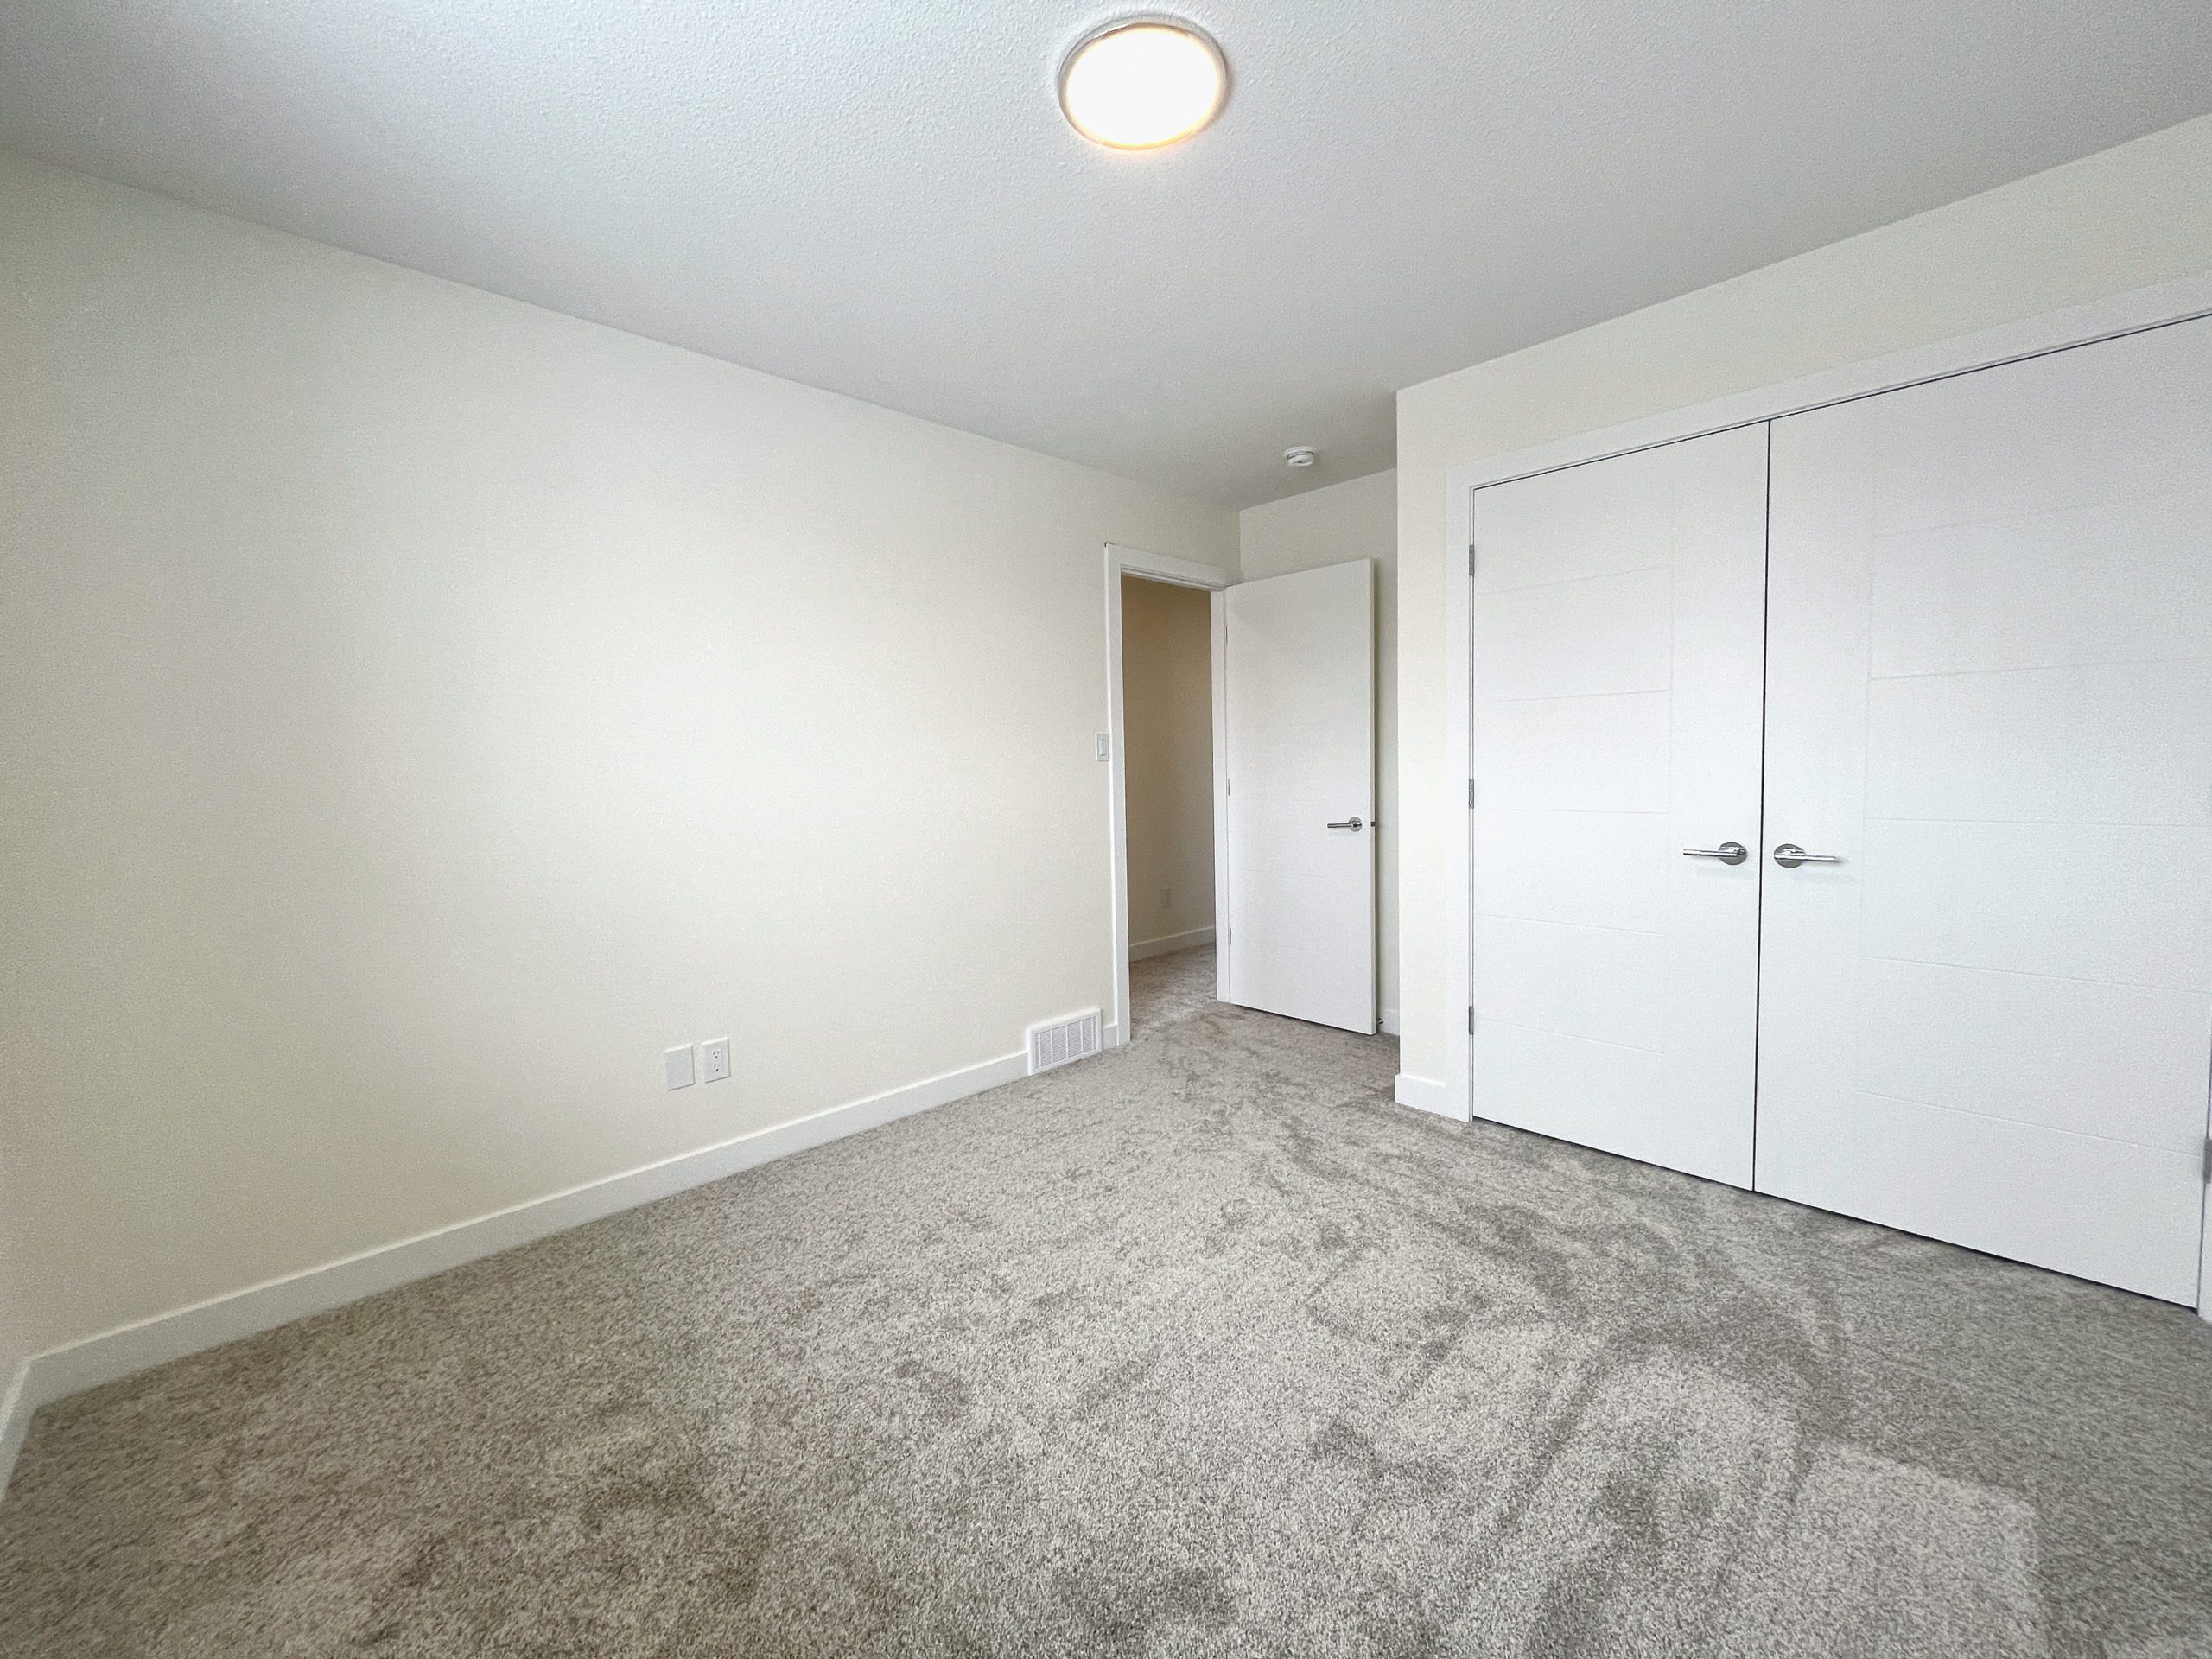 An empty bedroom showing the door to the hallway and closet.